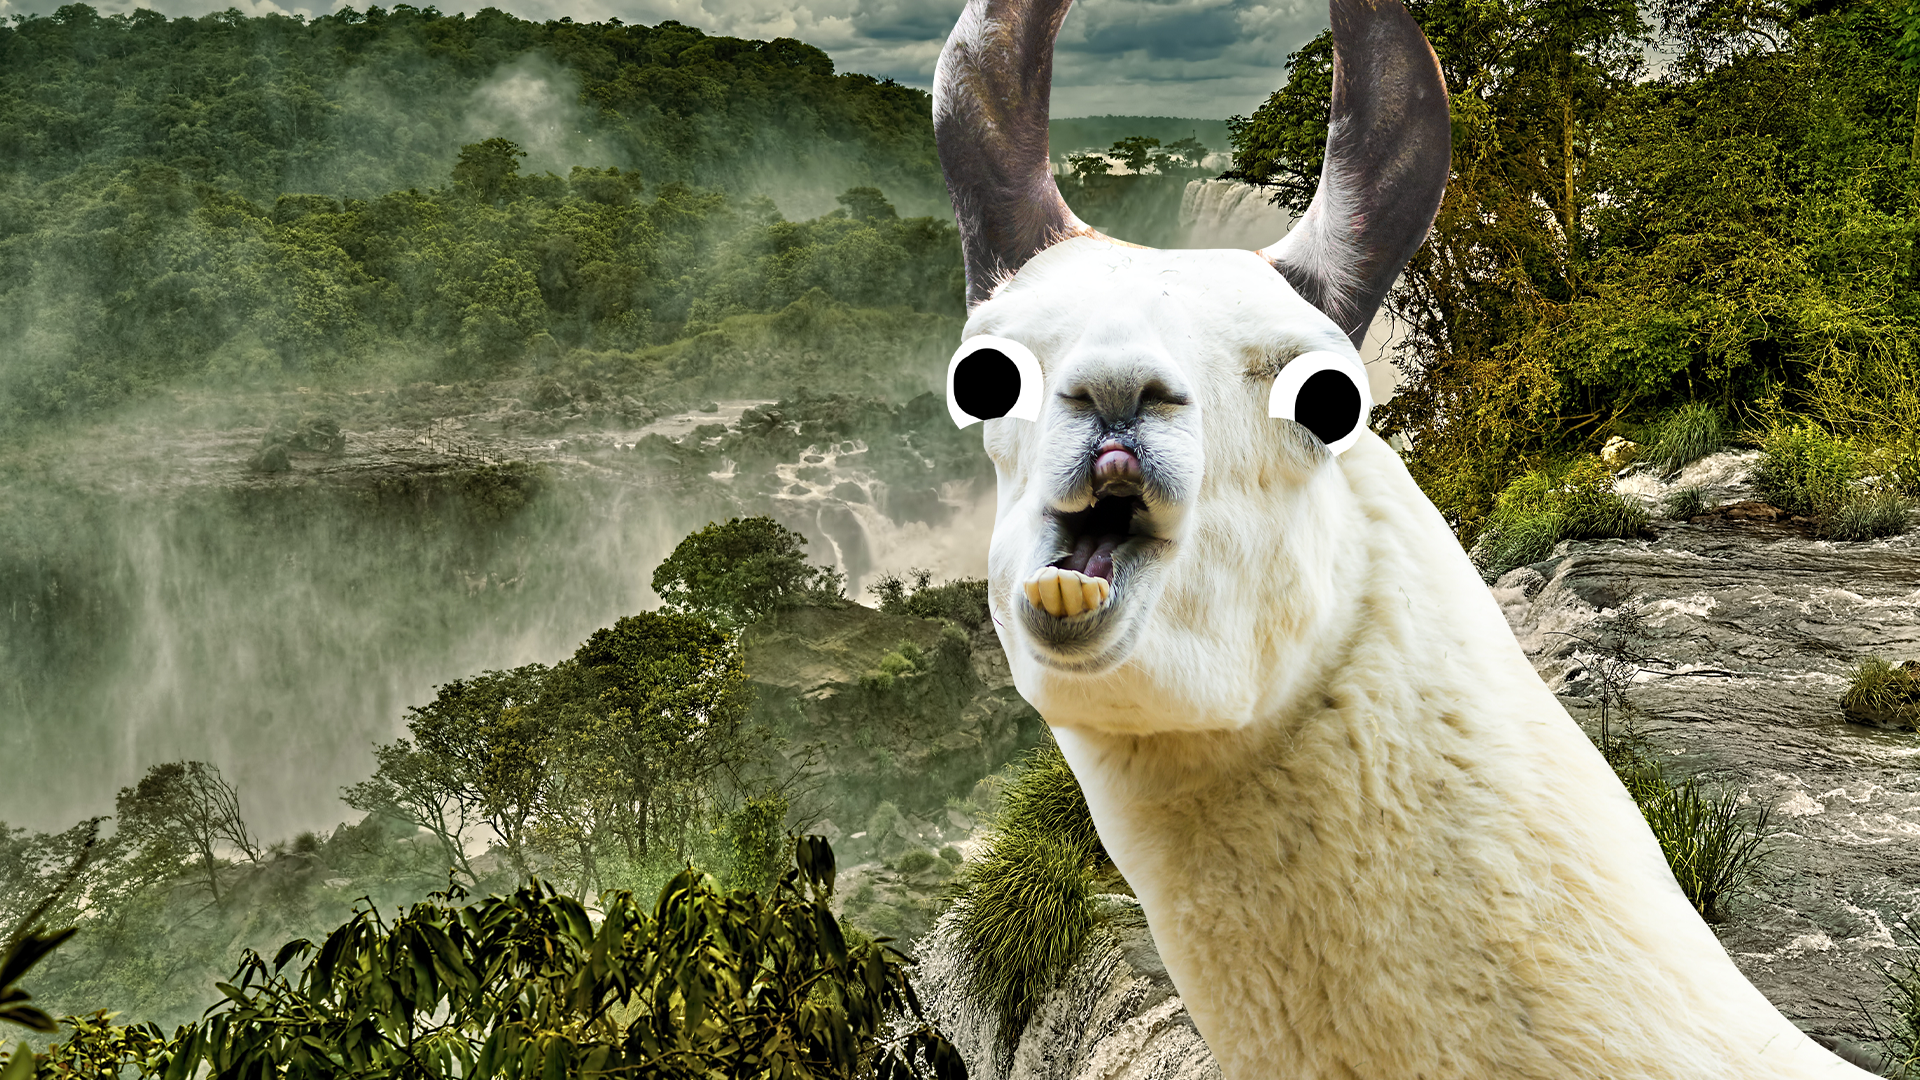 Beano llama and jungle background